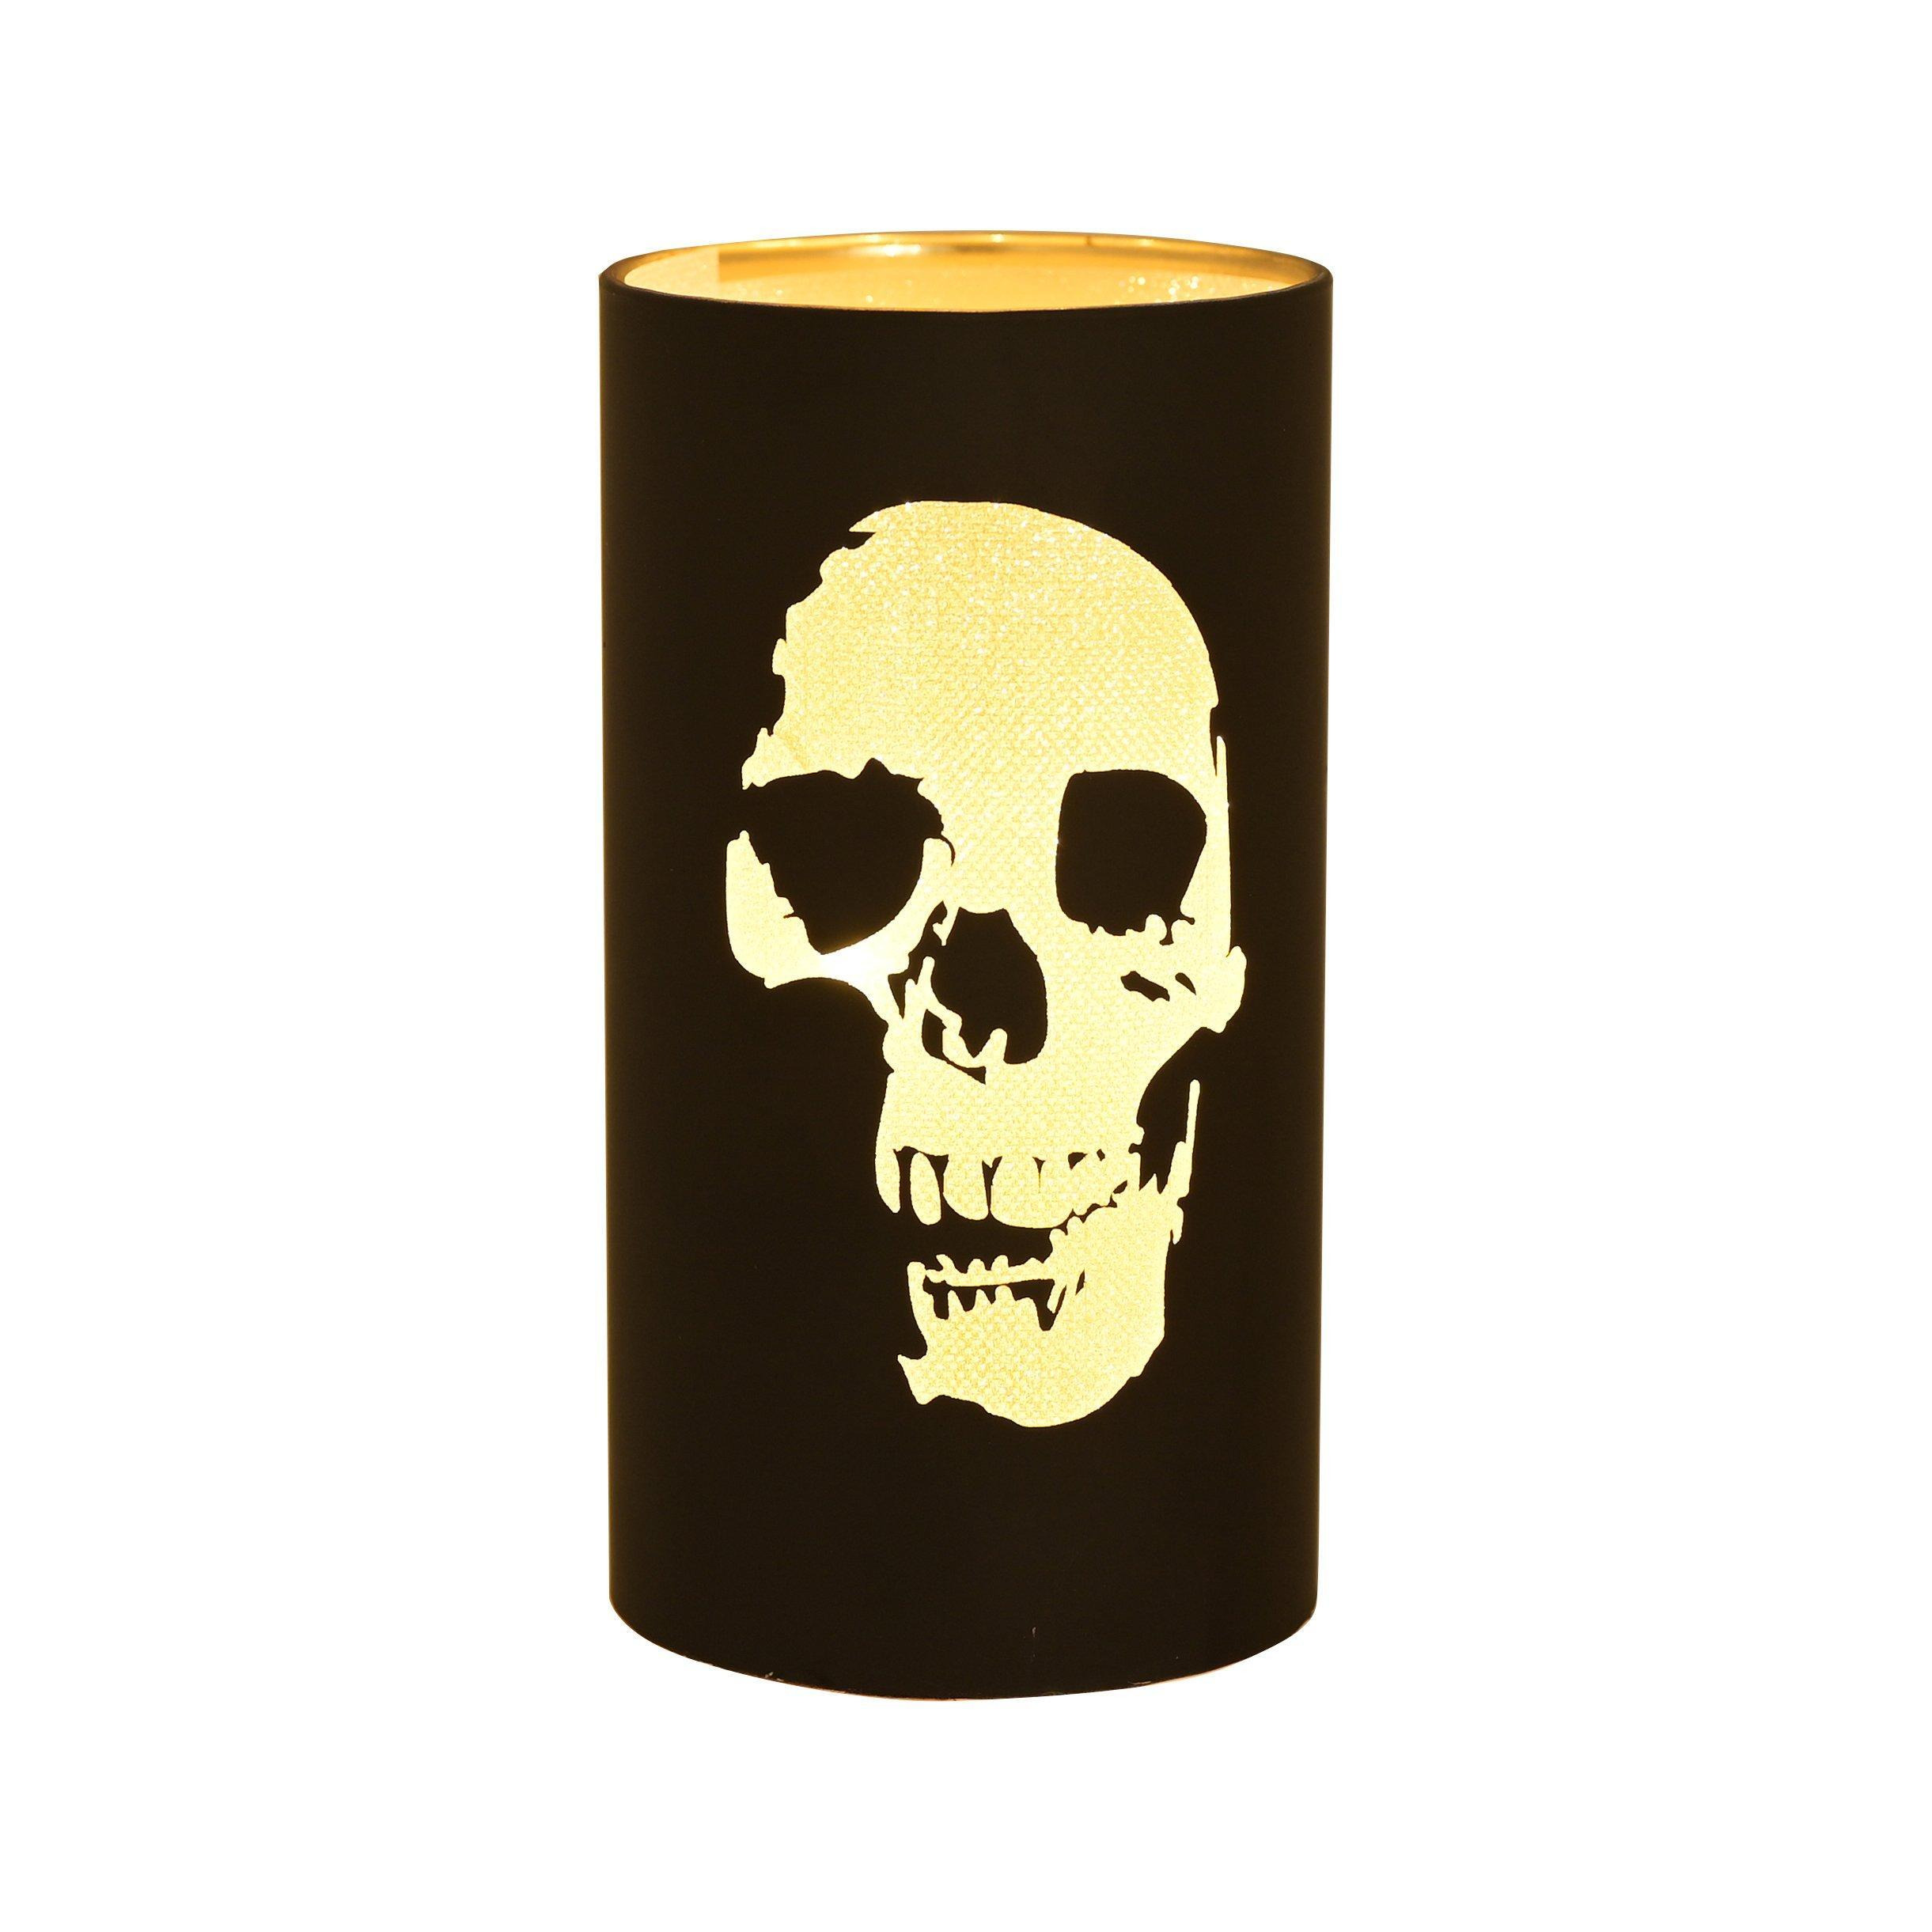 Hocus Pocus Halloween Black and Gold LED Skull Silhouette Lantern - image 1